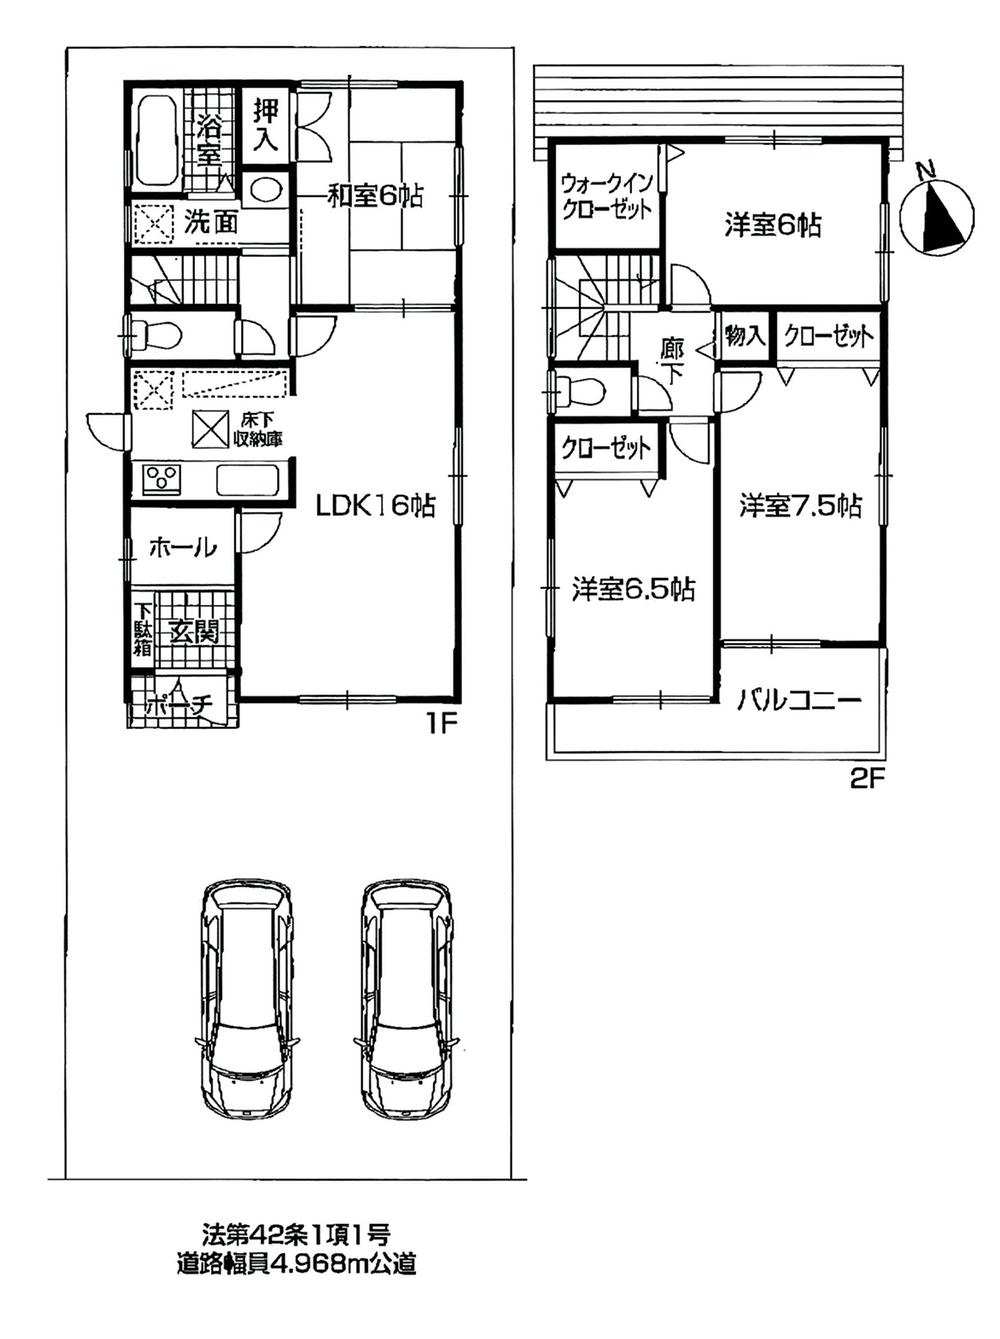 Floor plan. (Building 1), Price 25,300,000 yen, 4LDK, Land area 133.45 sq m , Building area 98.82 sq m